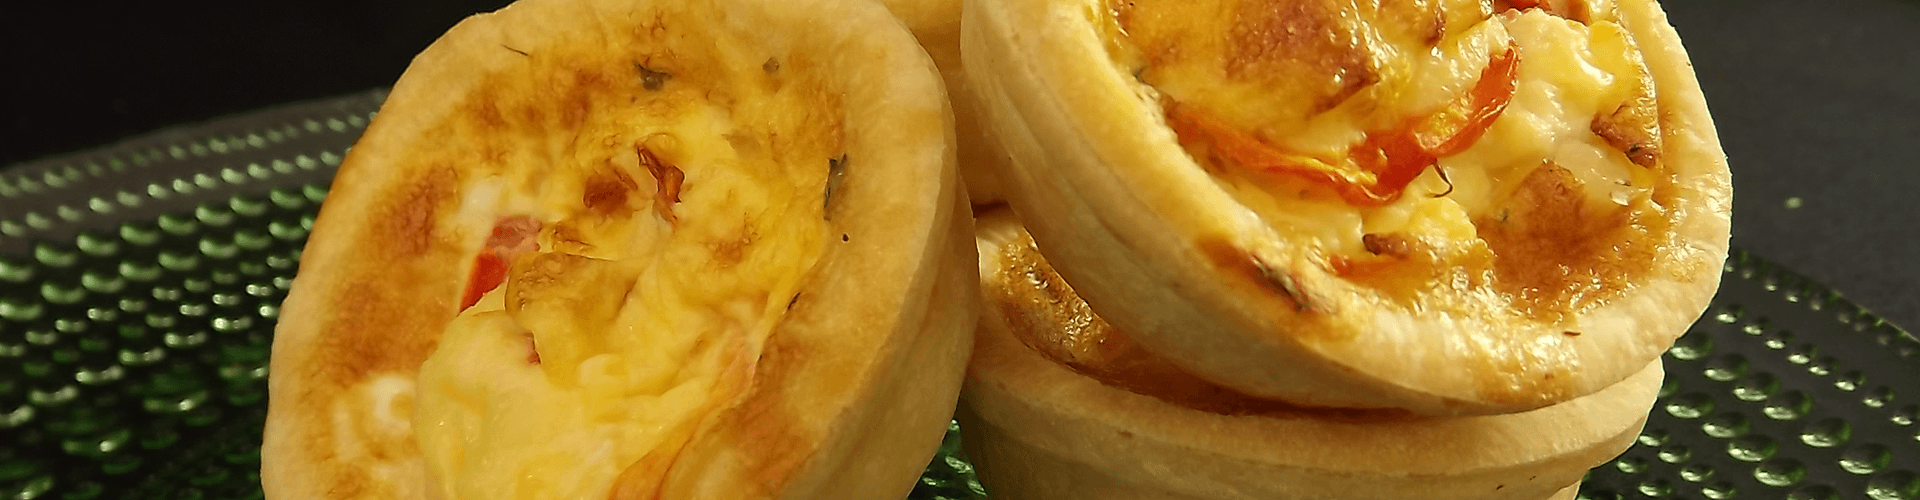 Kerry’s Handmade Pies